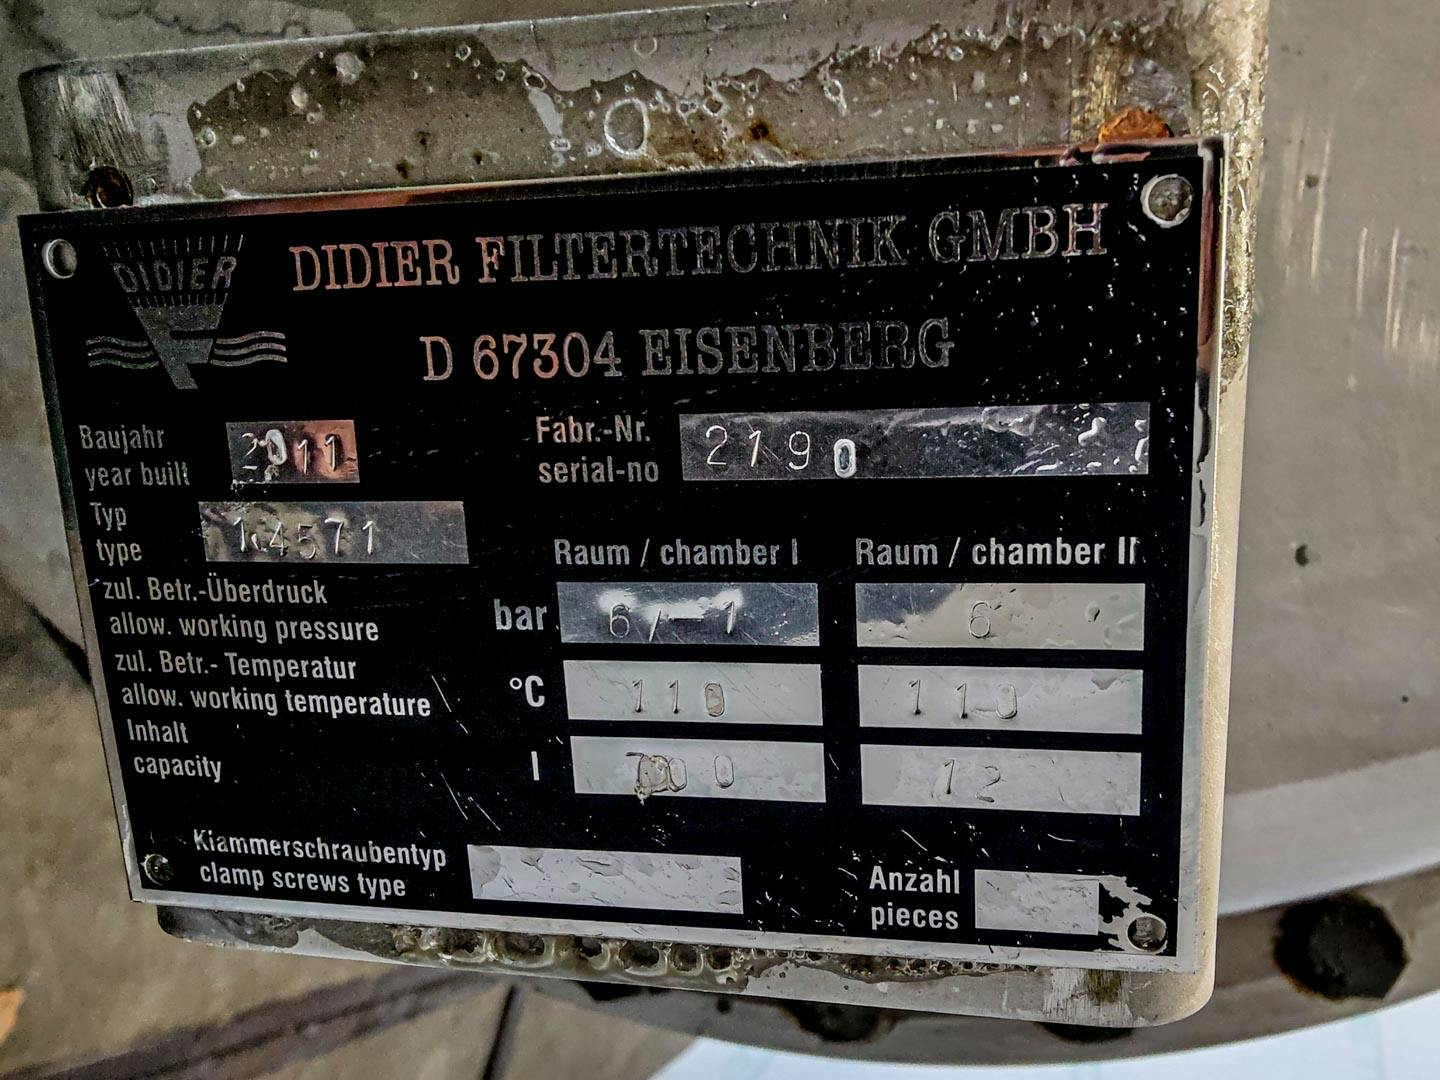 Didier Filtertechnik 550 Ltr. - Reactor de acero inoxidable - image 7